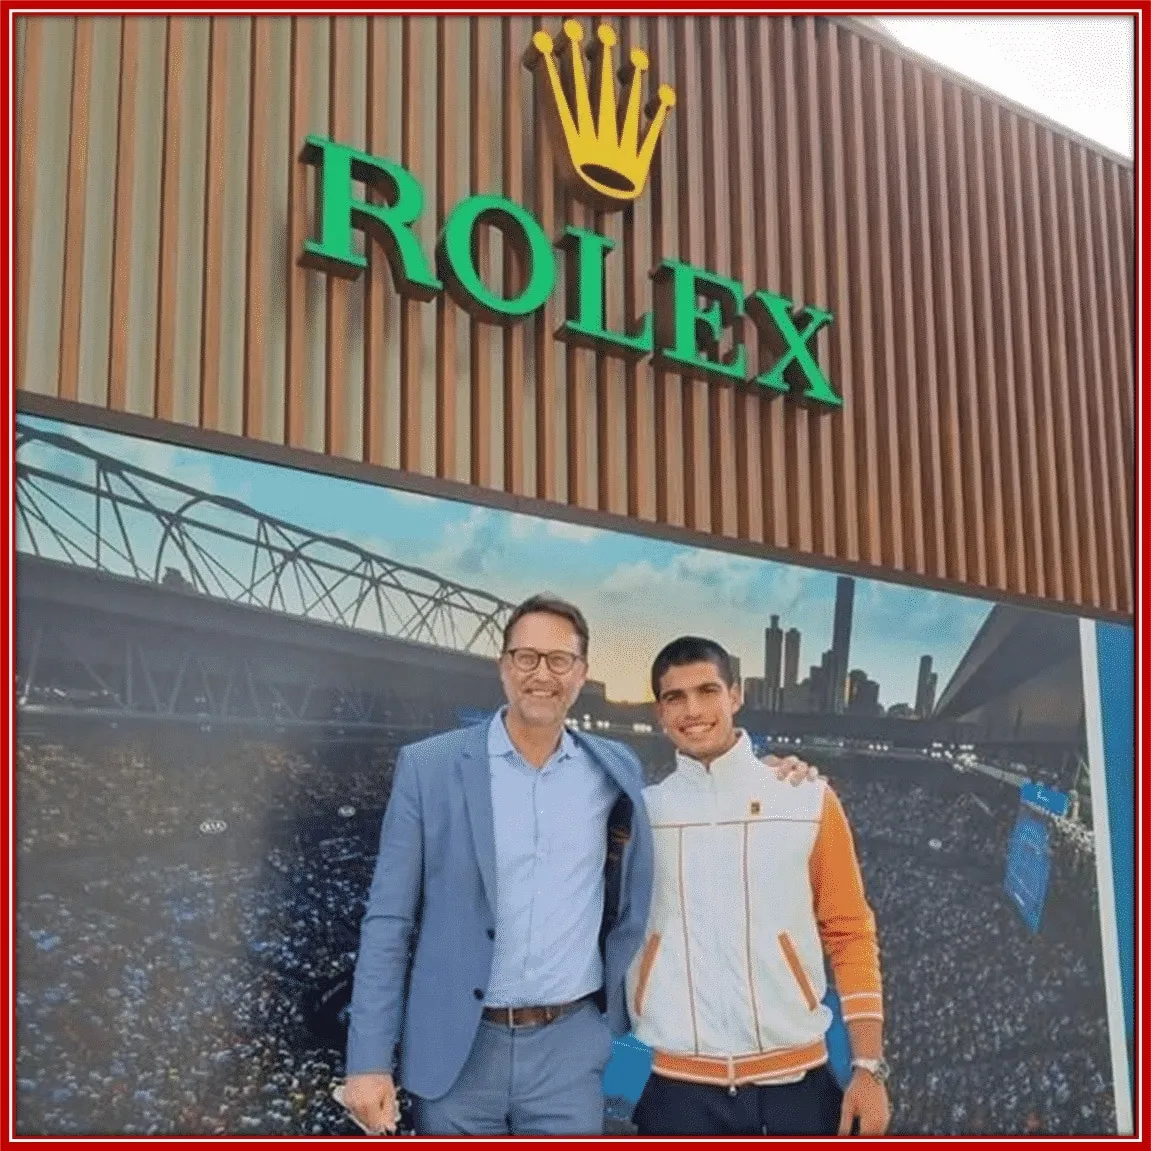 Carlos Alcaraz became a brand ambassador for Rolex in 2022.